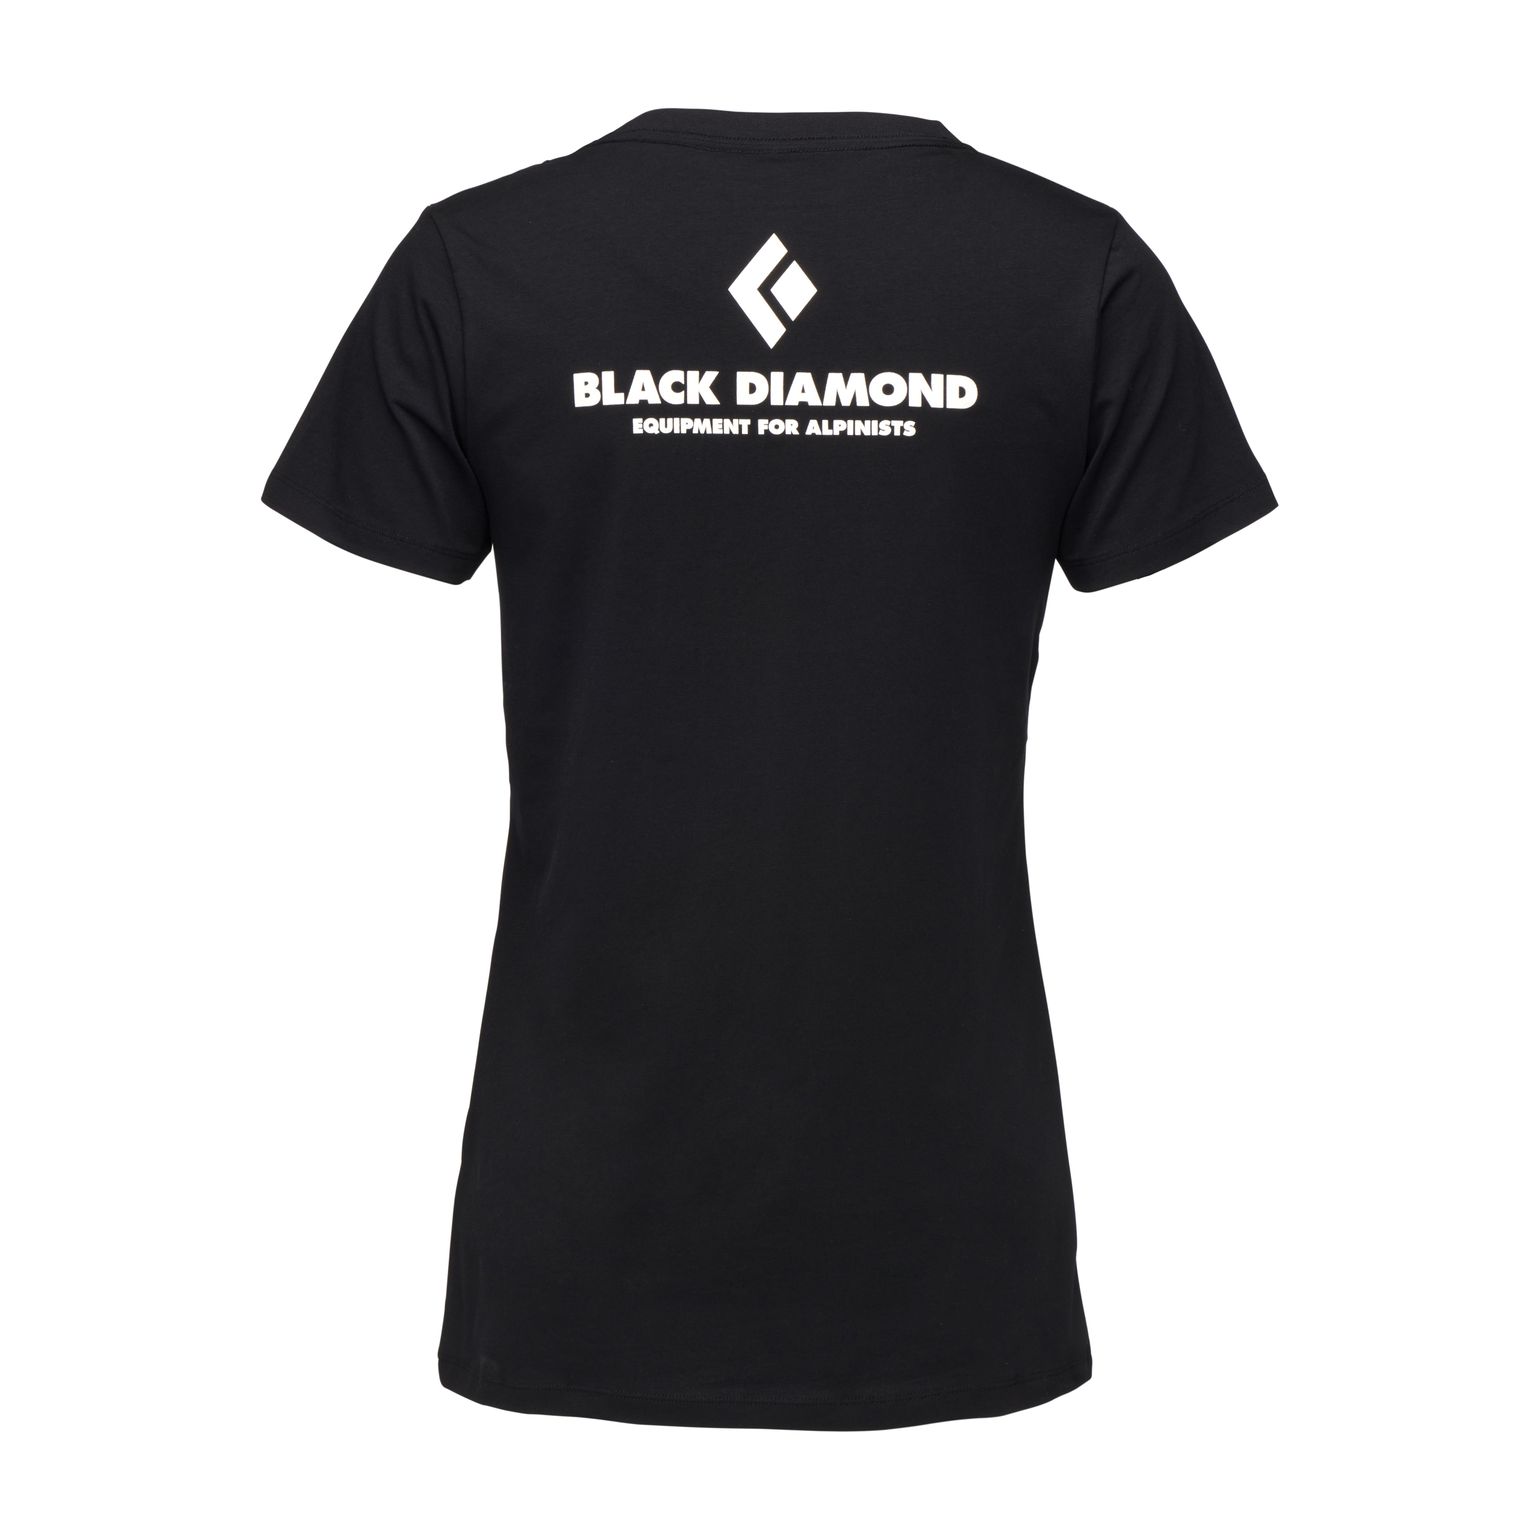 Black Diamond Women's Equipment For Alpinists Shortsleeve Tee Black